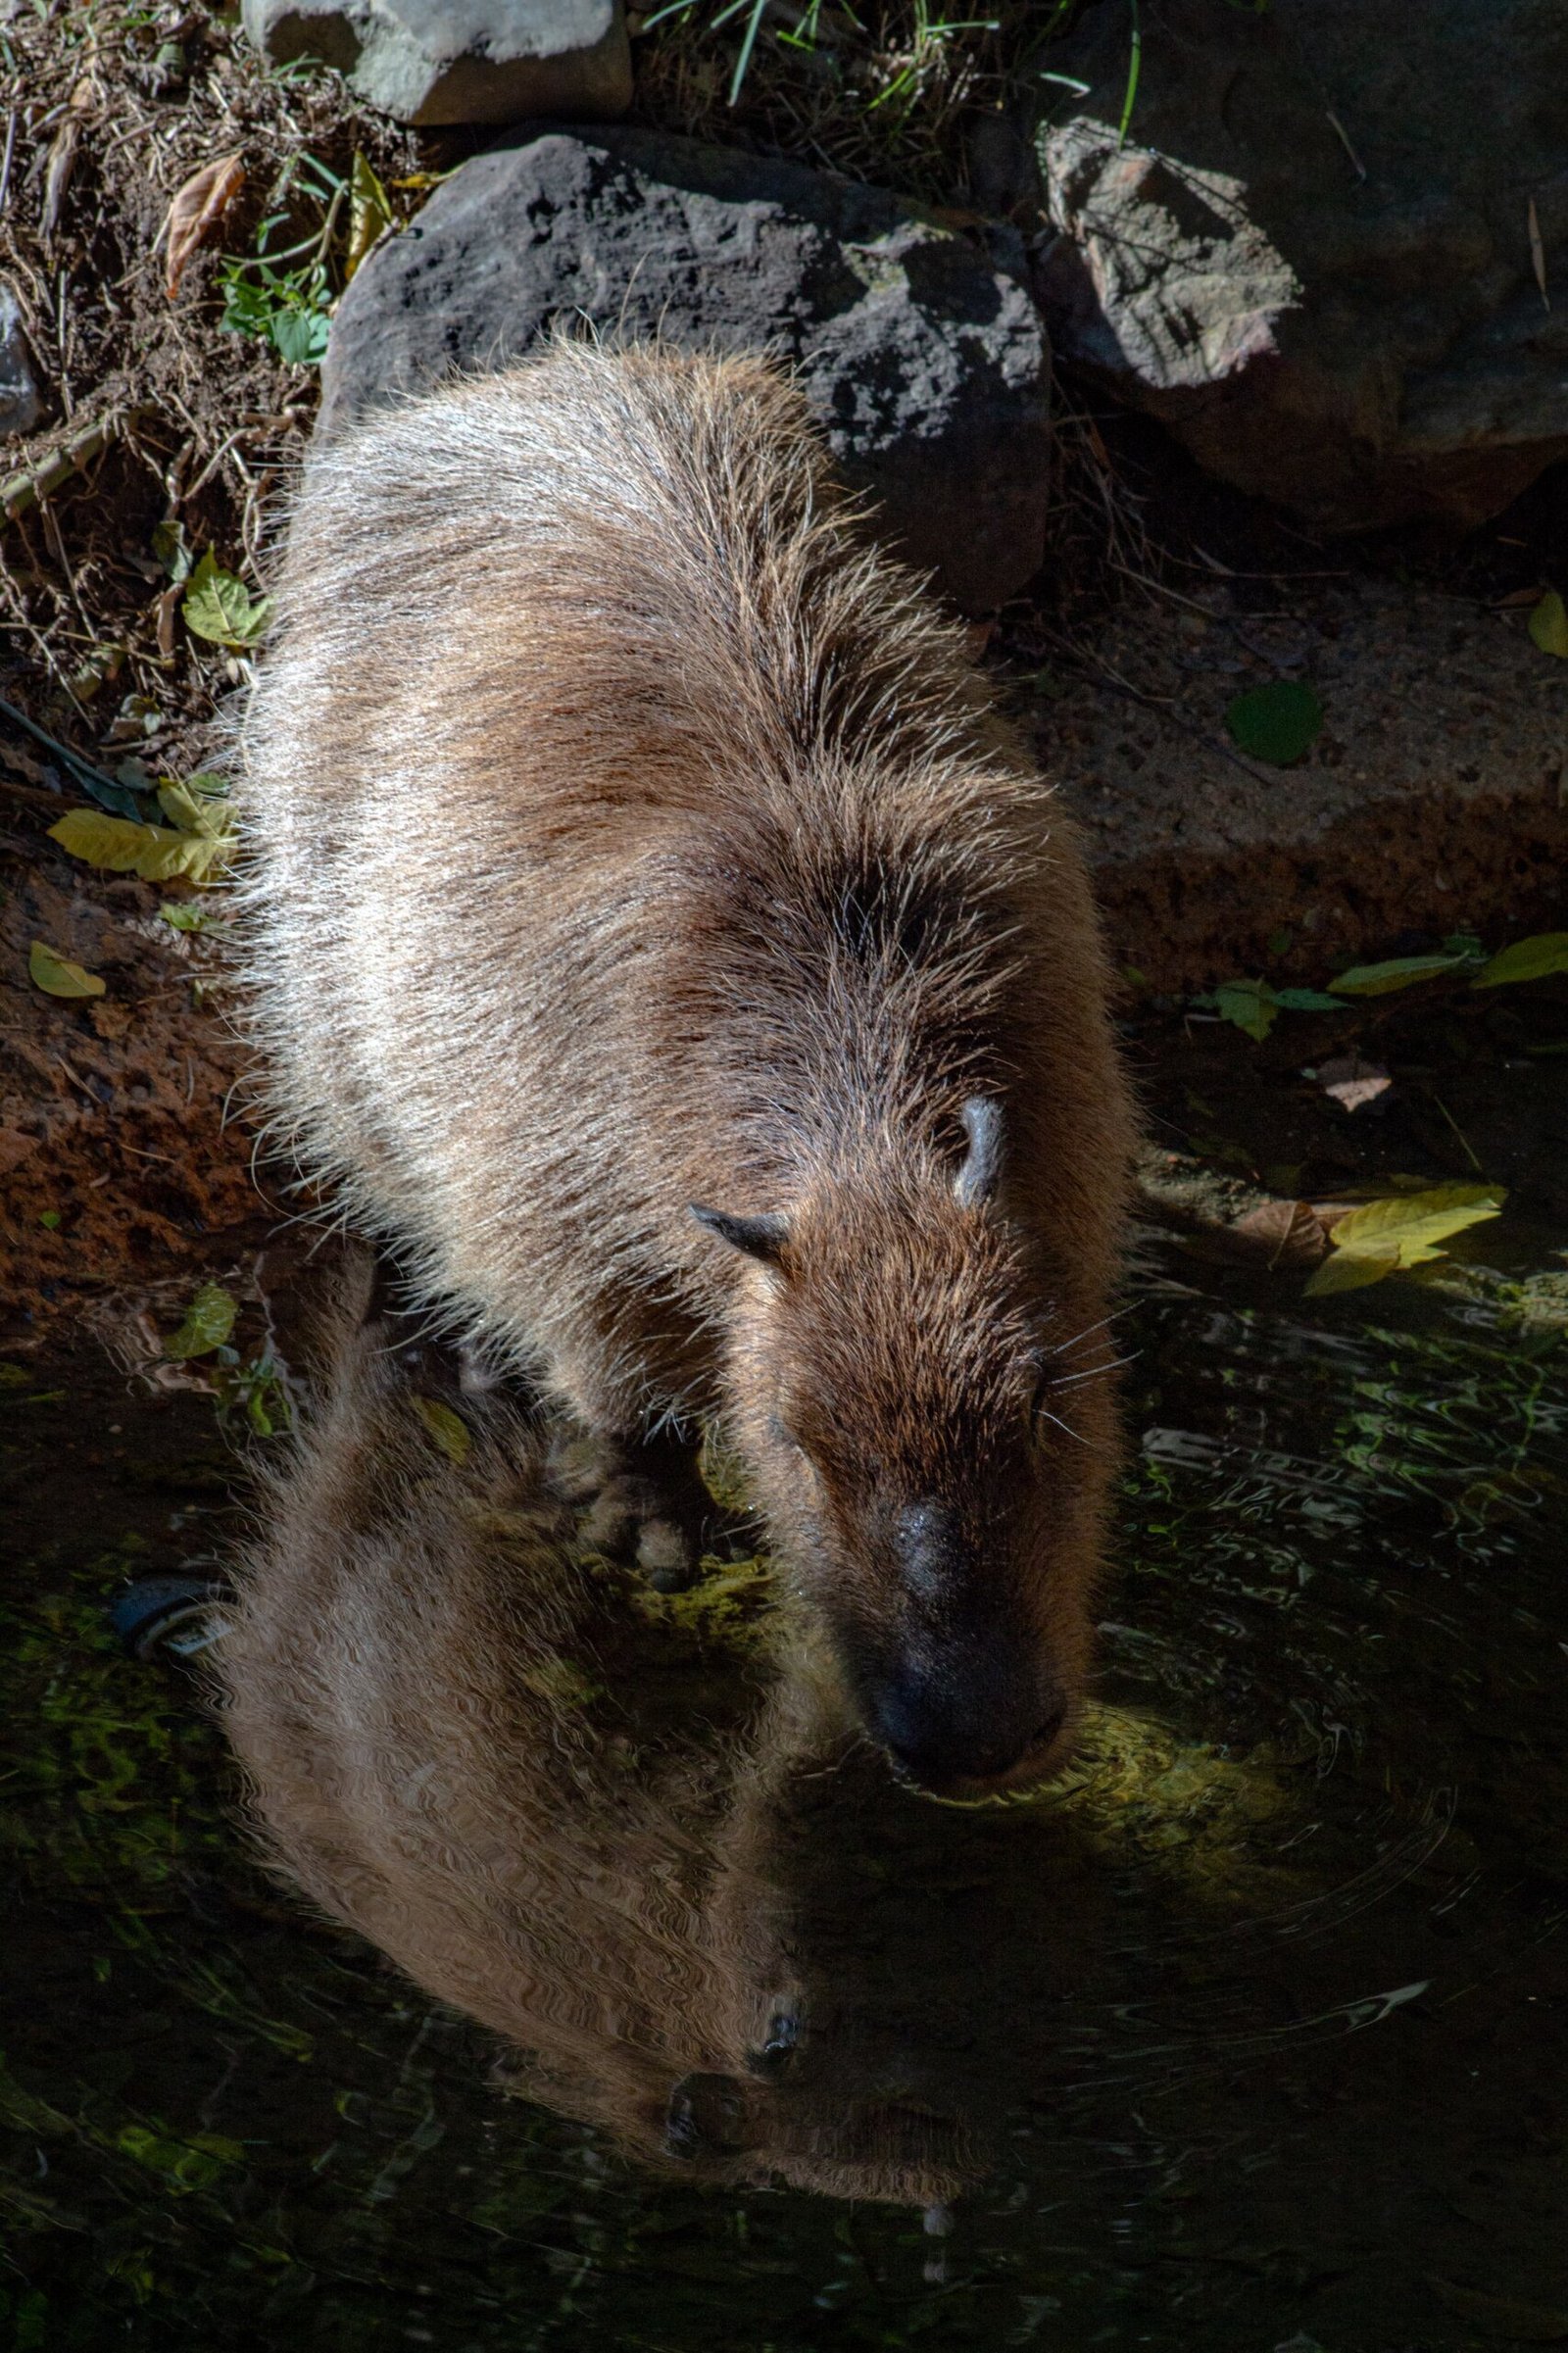 The Invasion of Capybaras in Argentina